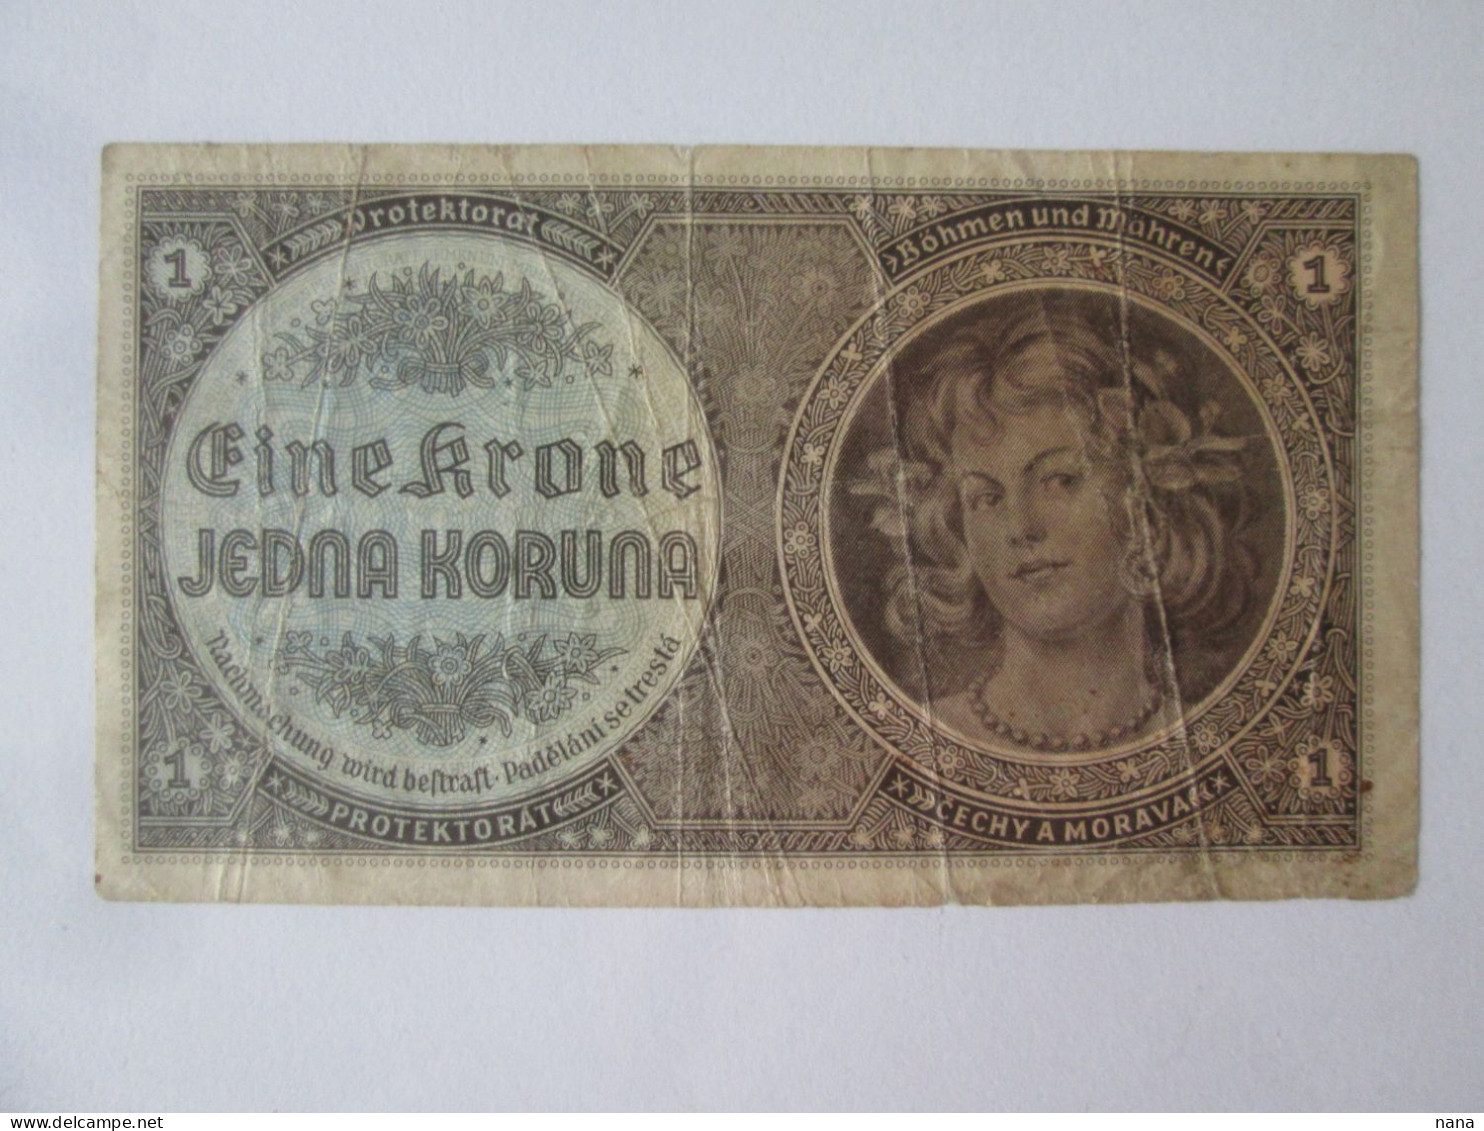 Bohemia & Moravia Protektorat 1 Koruna 1940 Banknote German Occupation WWII Series D 030,see Pictures - Czechoslovakia